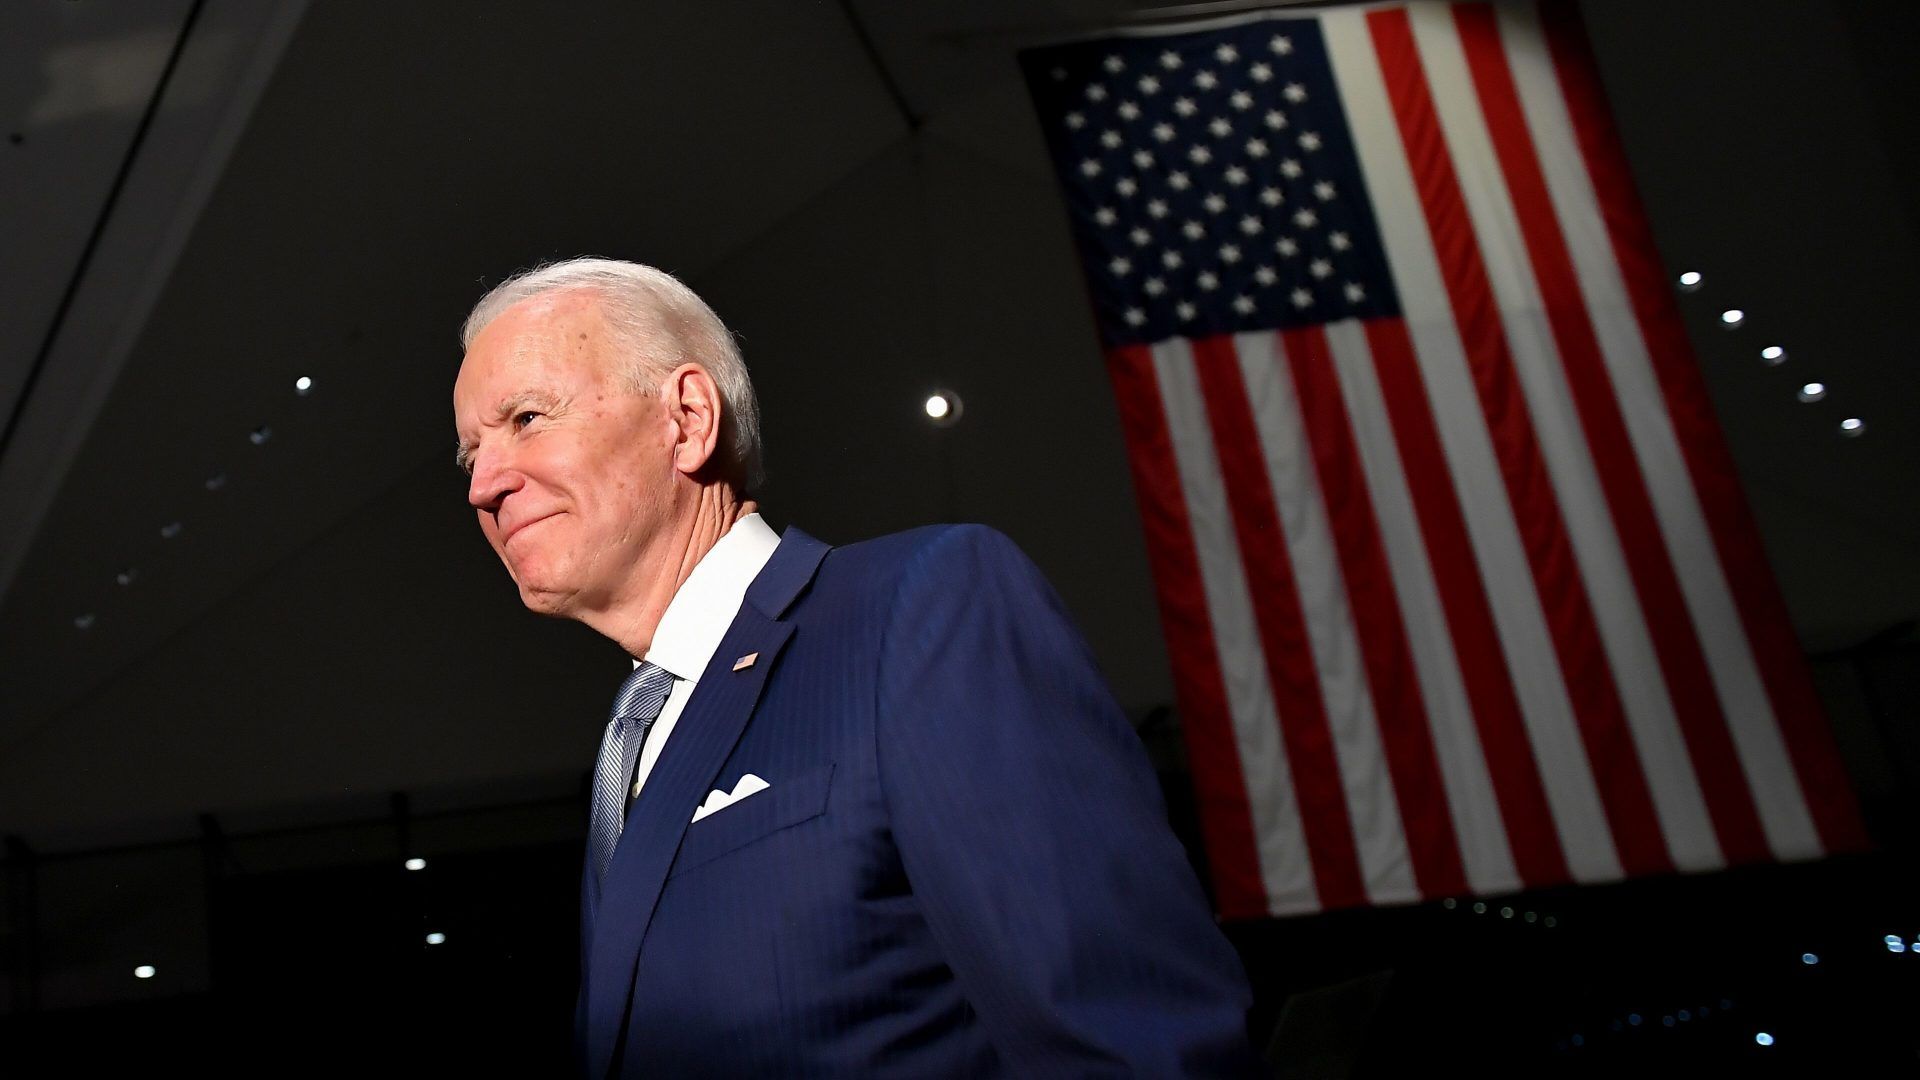 The Democratic nomination is now in view for Joe Biden